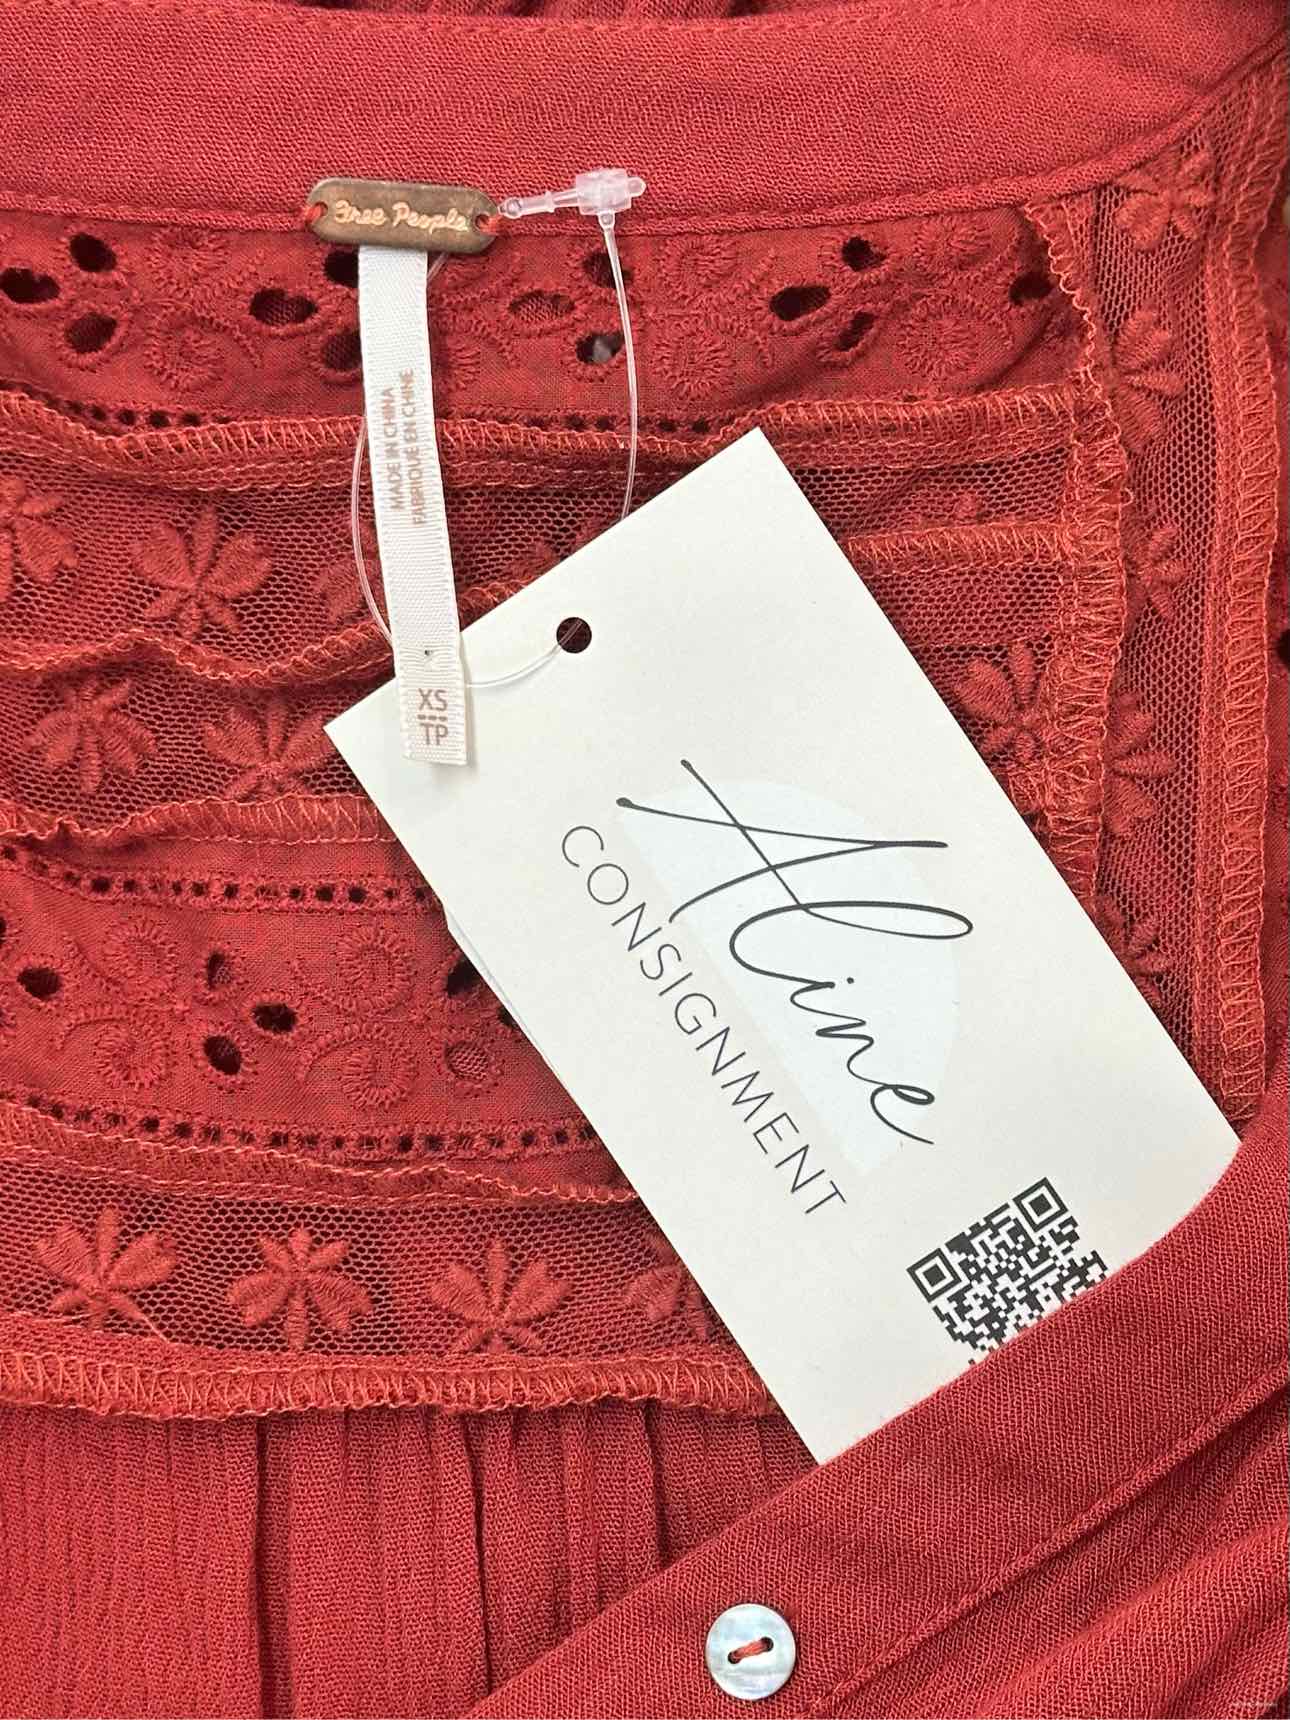 Free People Red Crochet Trim Dress Size XS